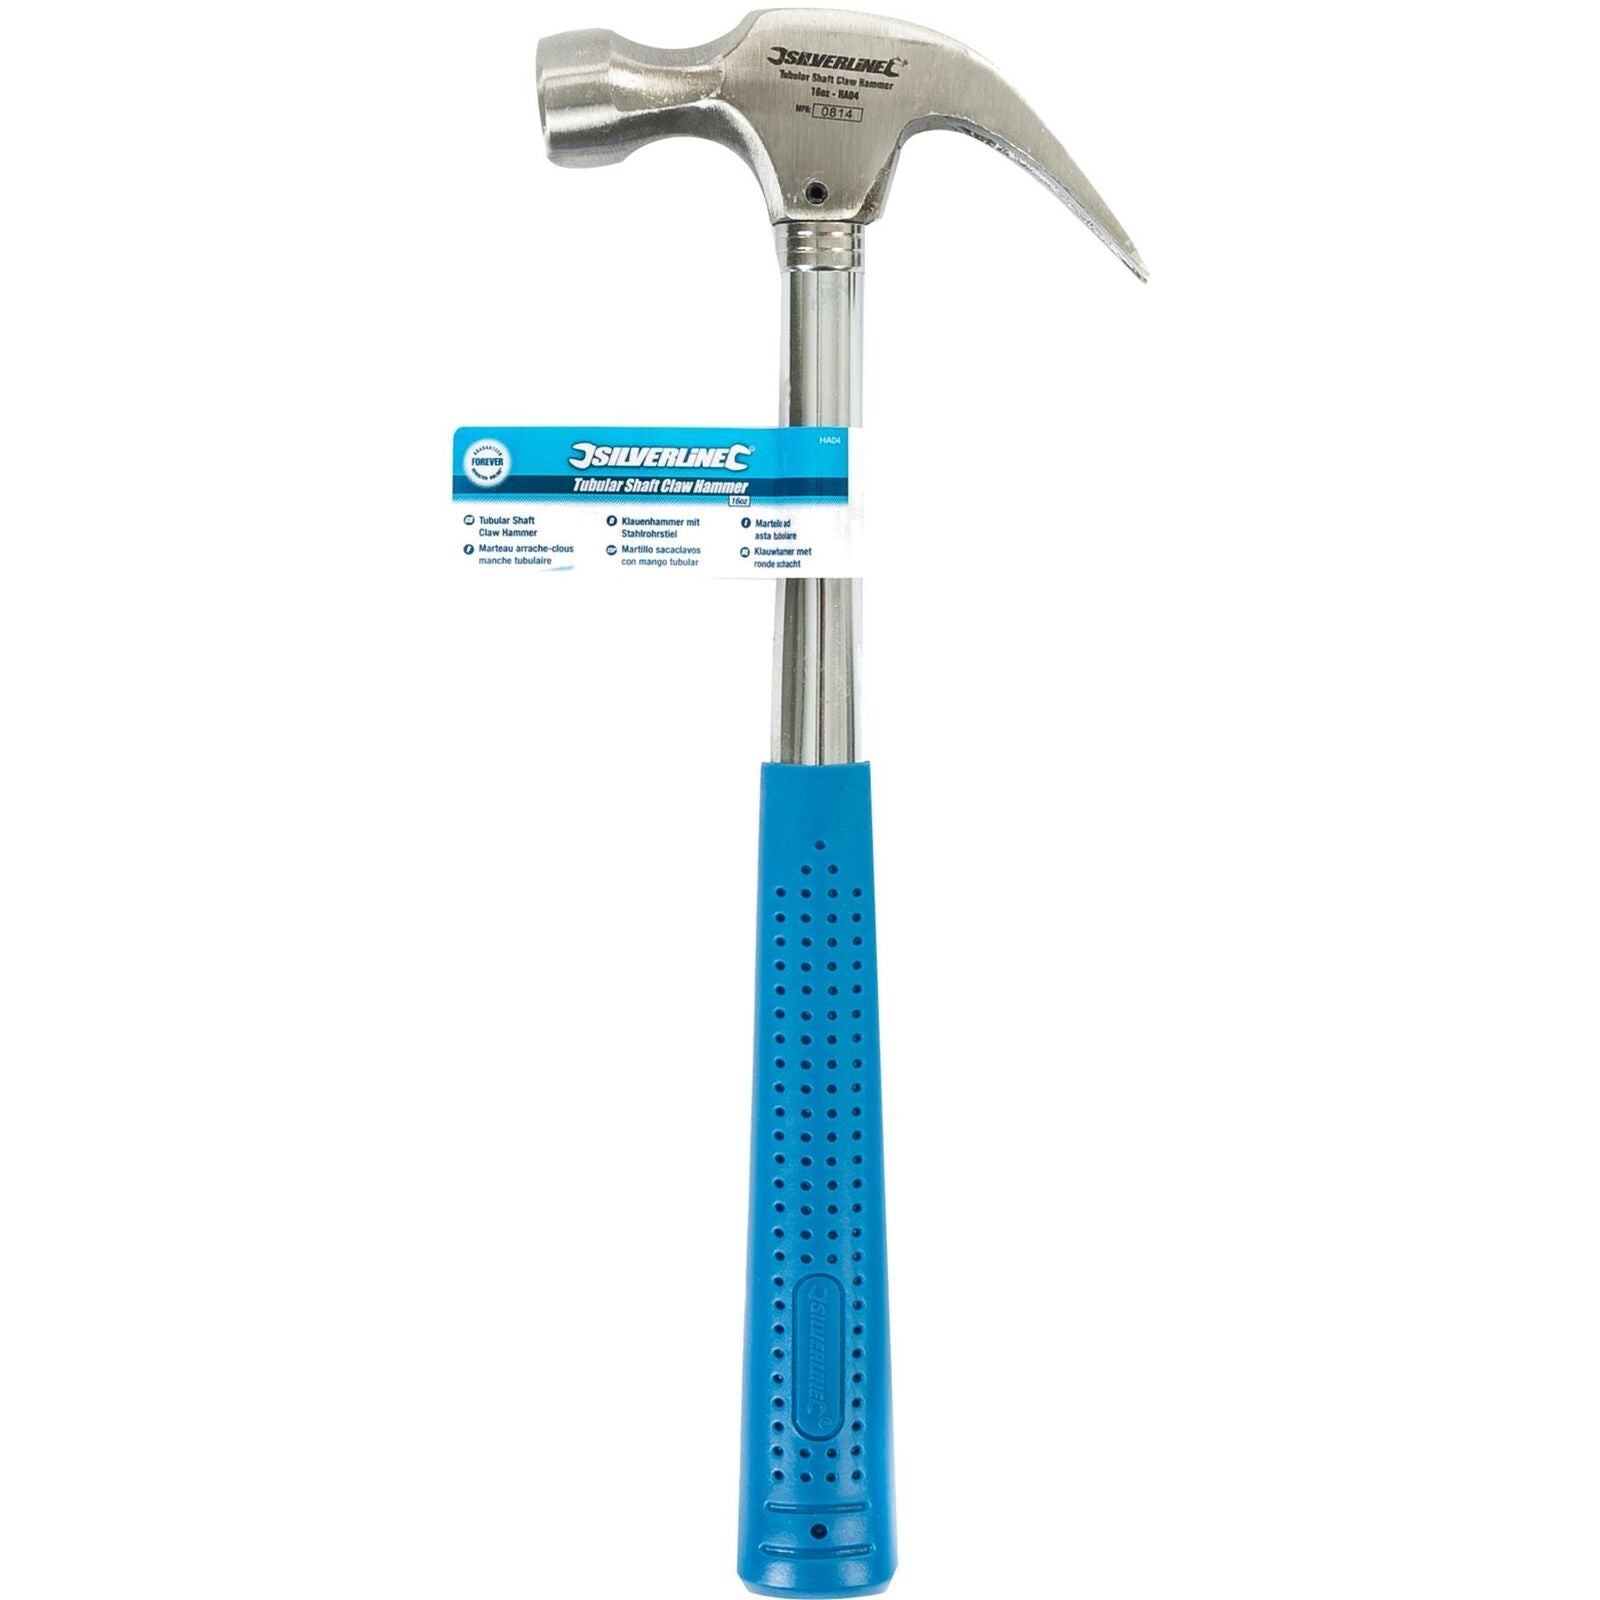 Silverline 16oz Tubular Shaft Claw Hammer Rubber Grip Handel Hardened Steel Head